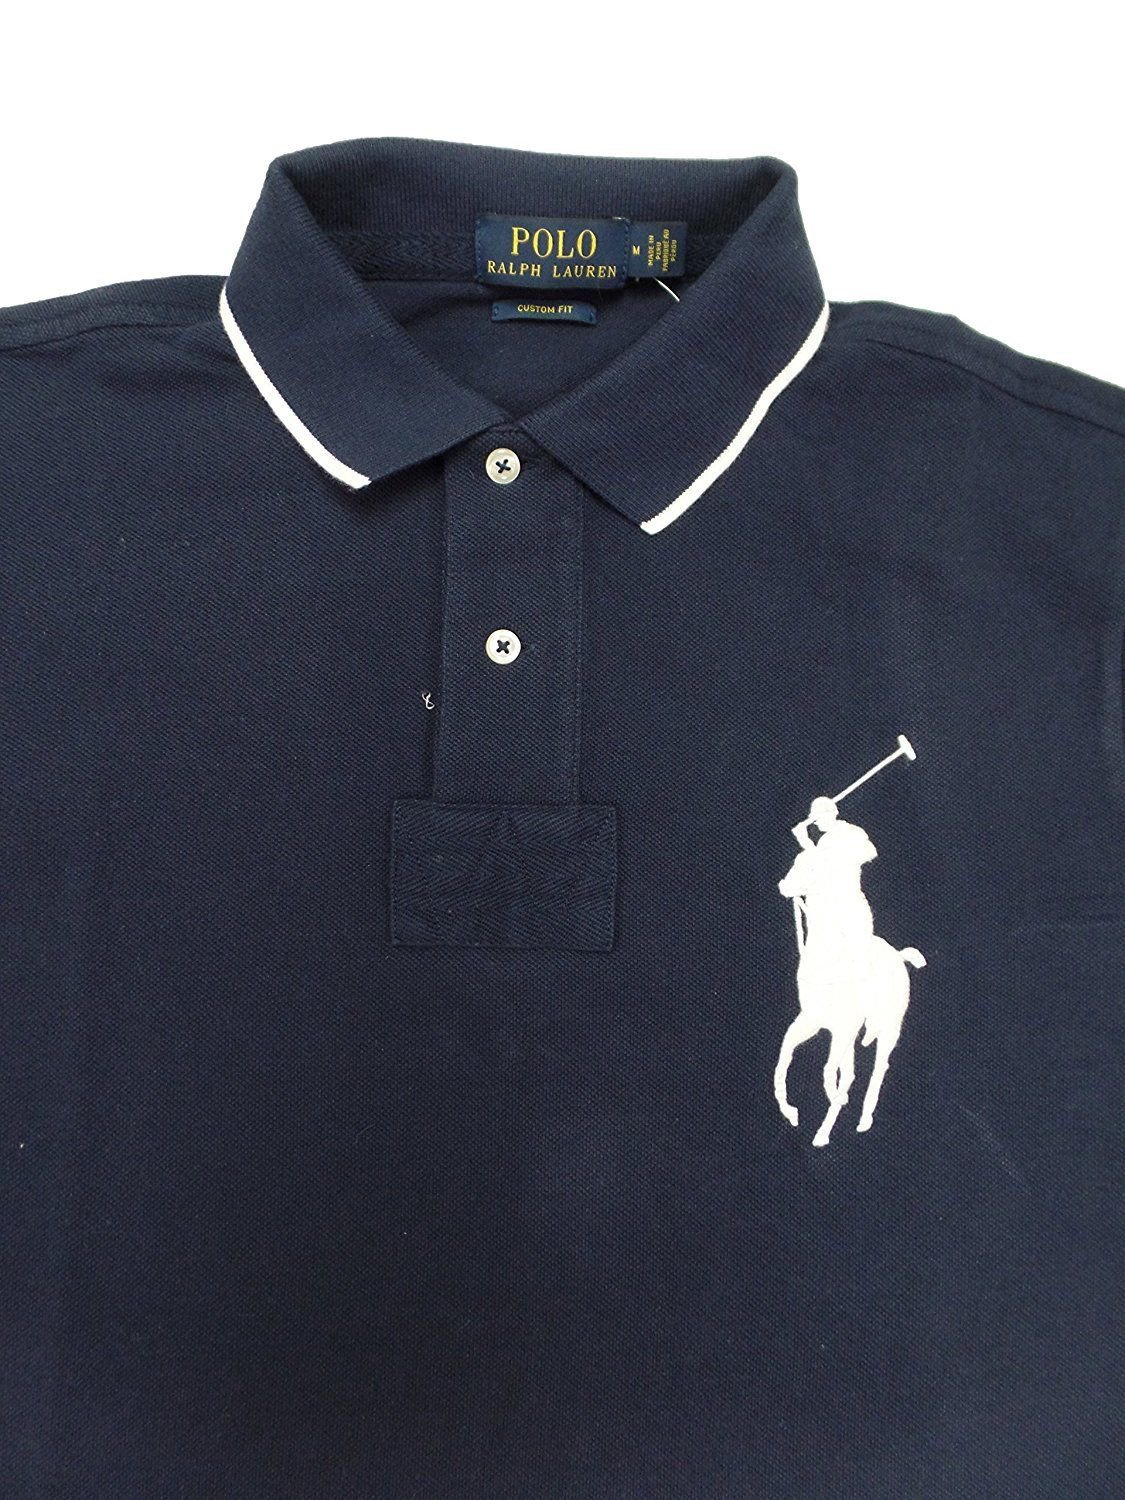 Polo Ralph Lauren Men's Custom Fit Mesh Big Pony Shirt NAVY BLUE WHITE #3 S